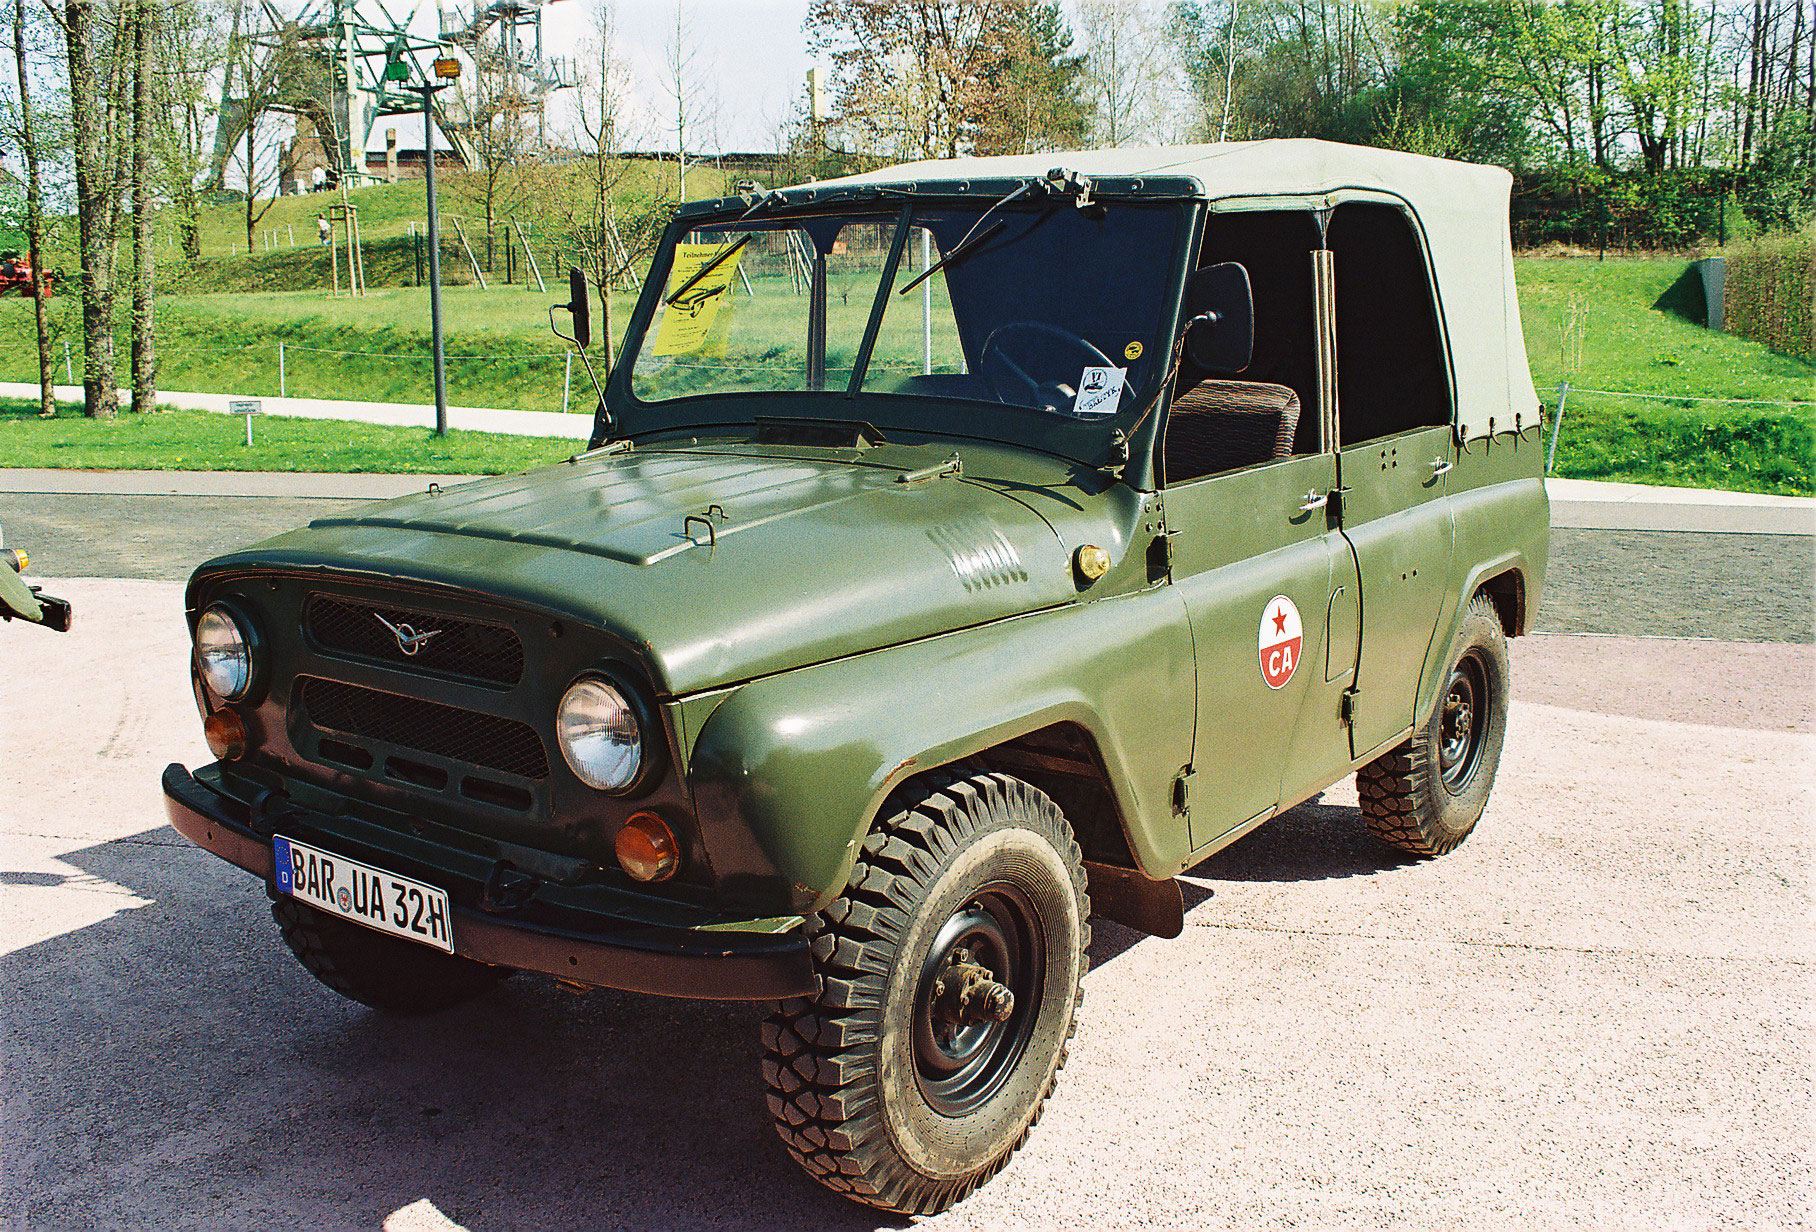 UAZ UAZ 469